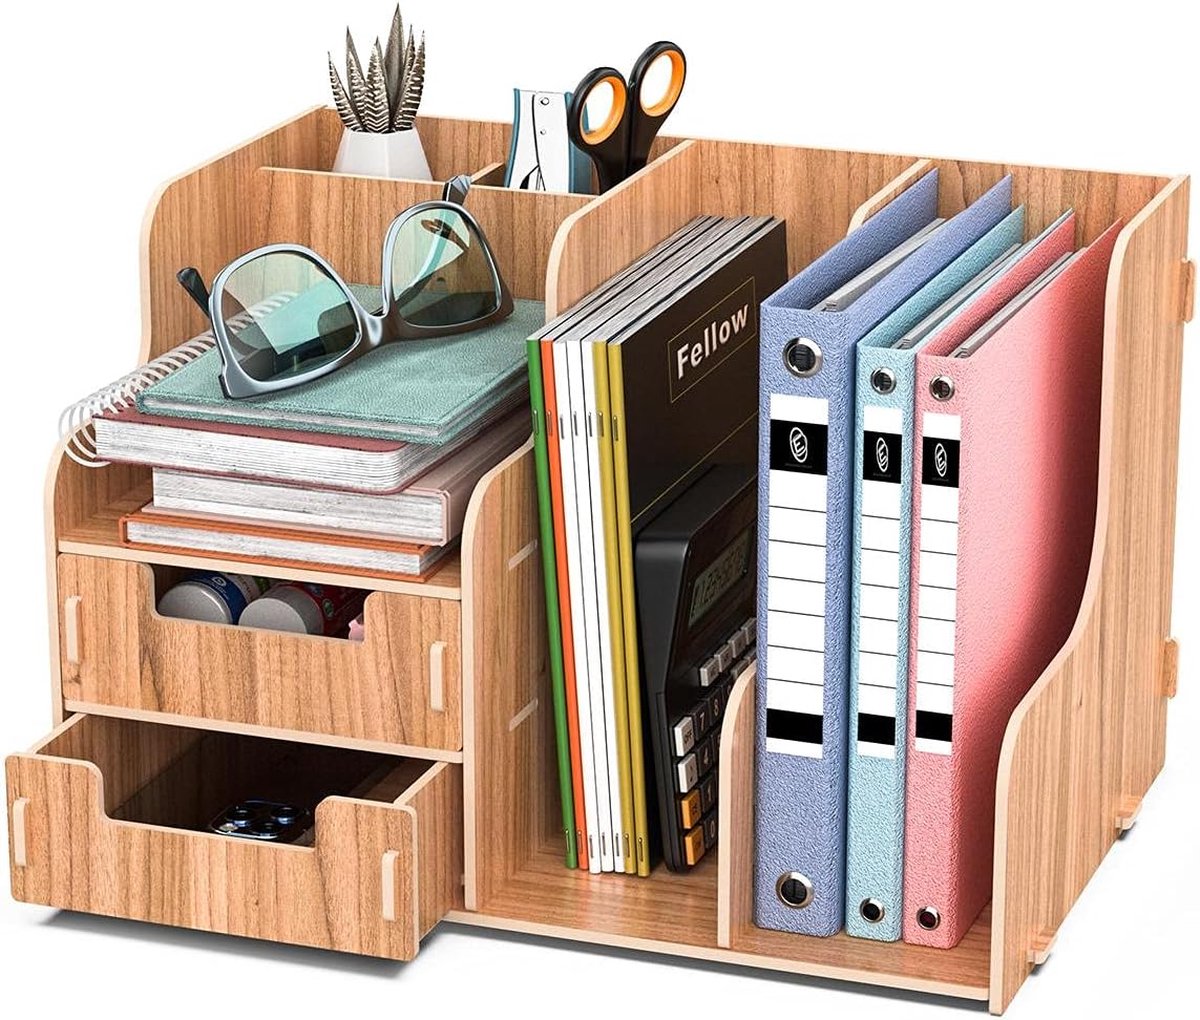 Bureau Organizer - Bureaukastje File Holder Desktop Document Rack Bureau Nette Organizer Stationaire Opslag voor A4-papier, boeken, pennen en notebooks